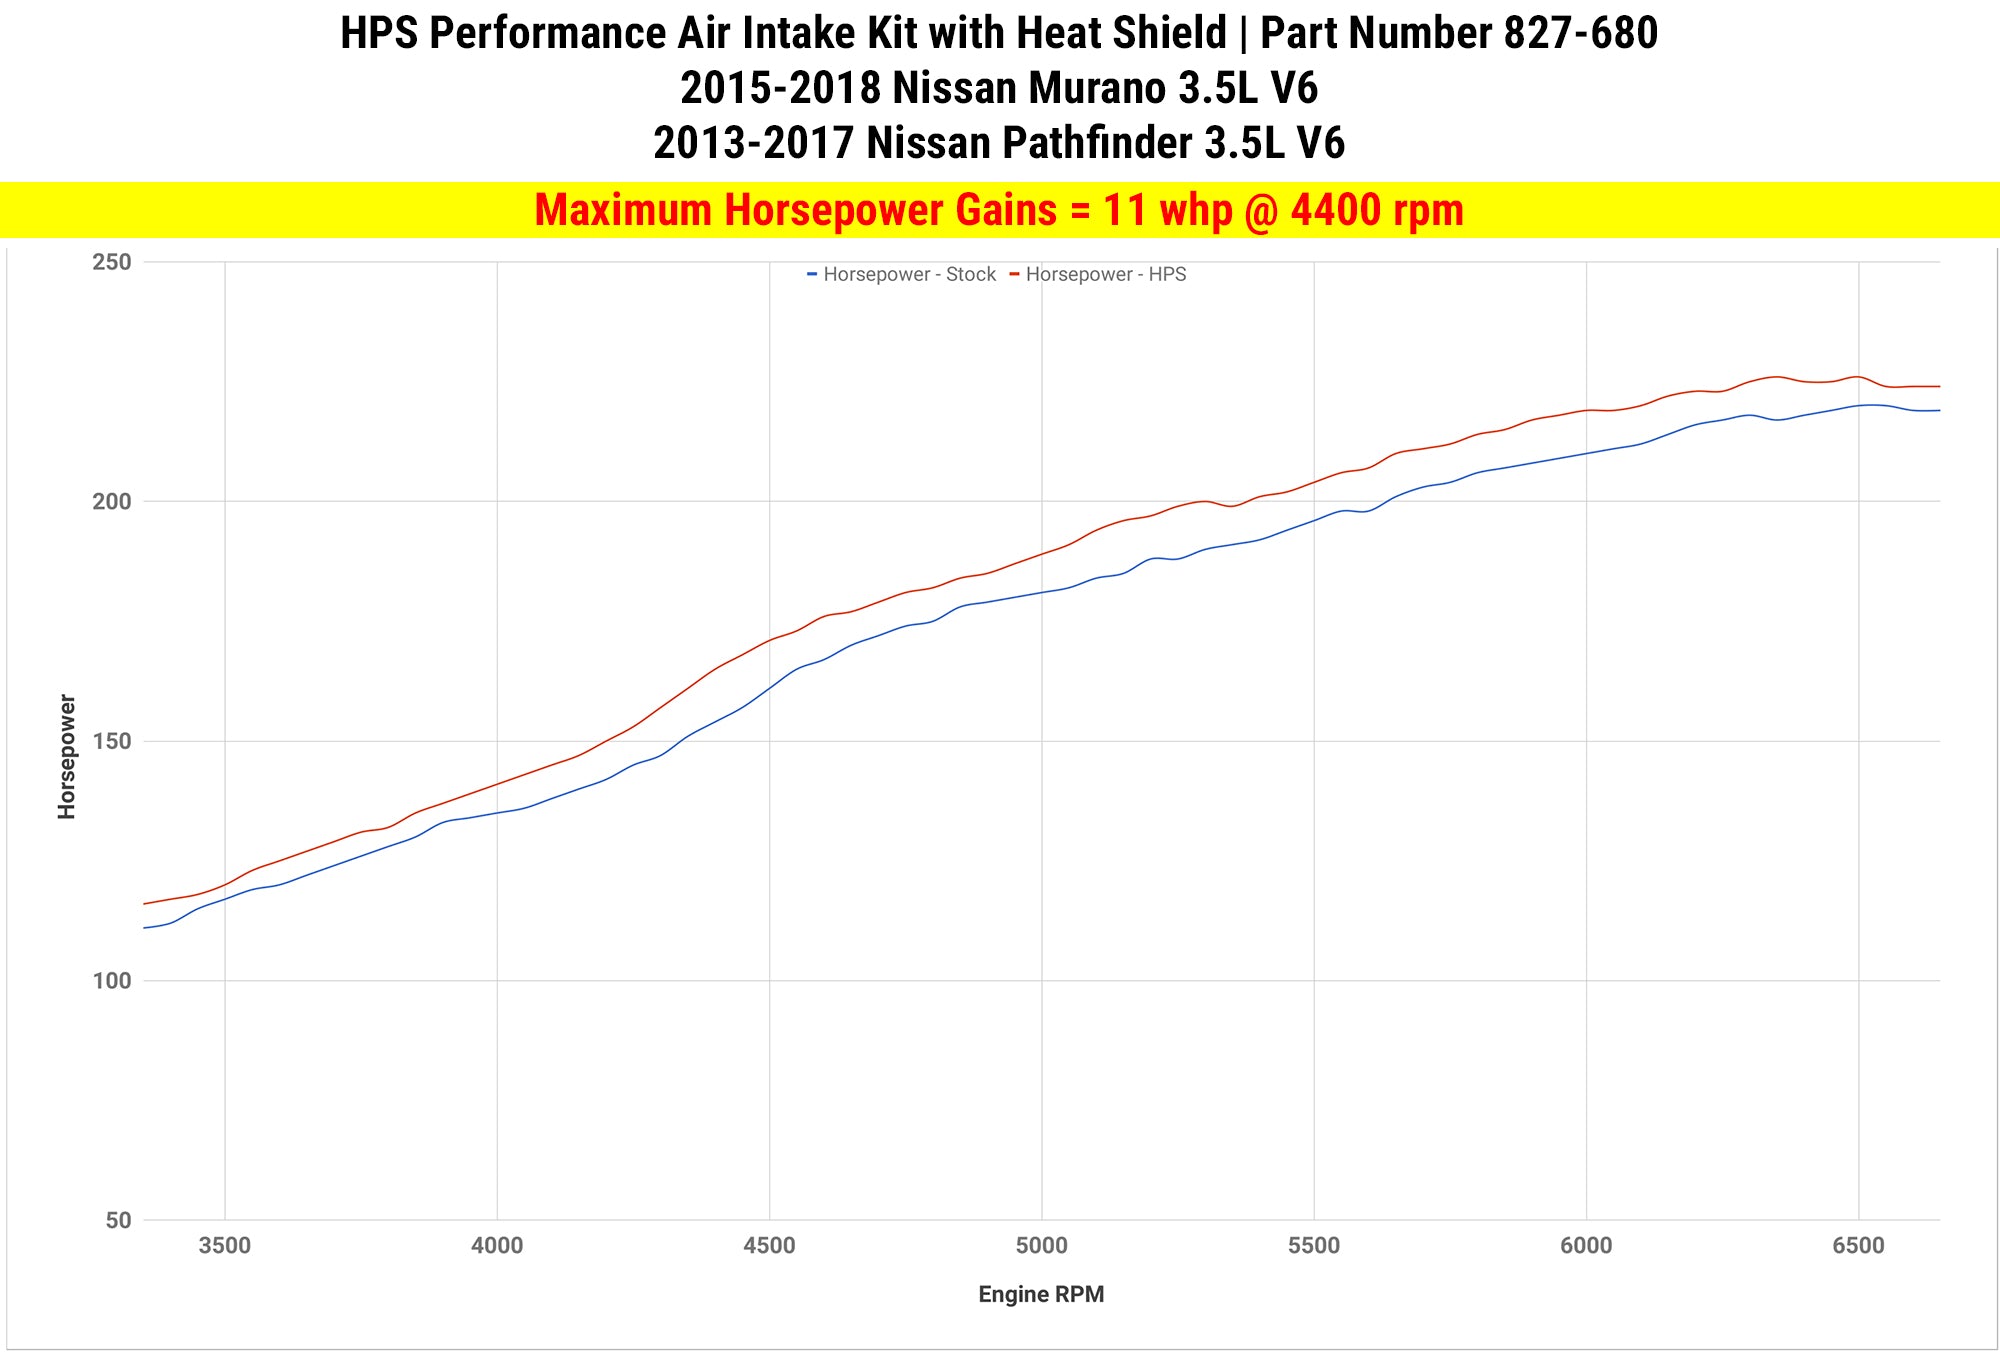 Dyno proven increase horsepower 11 whp HPS Shortram Cold Air Intake Kit 2015-2018 Nissan Murano 3.5L V6 827-680